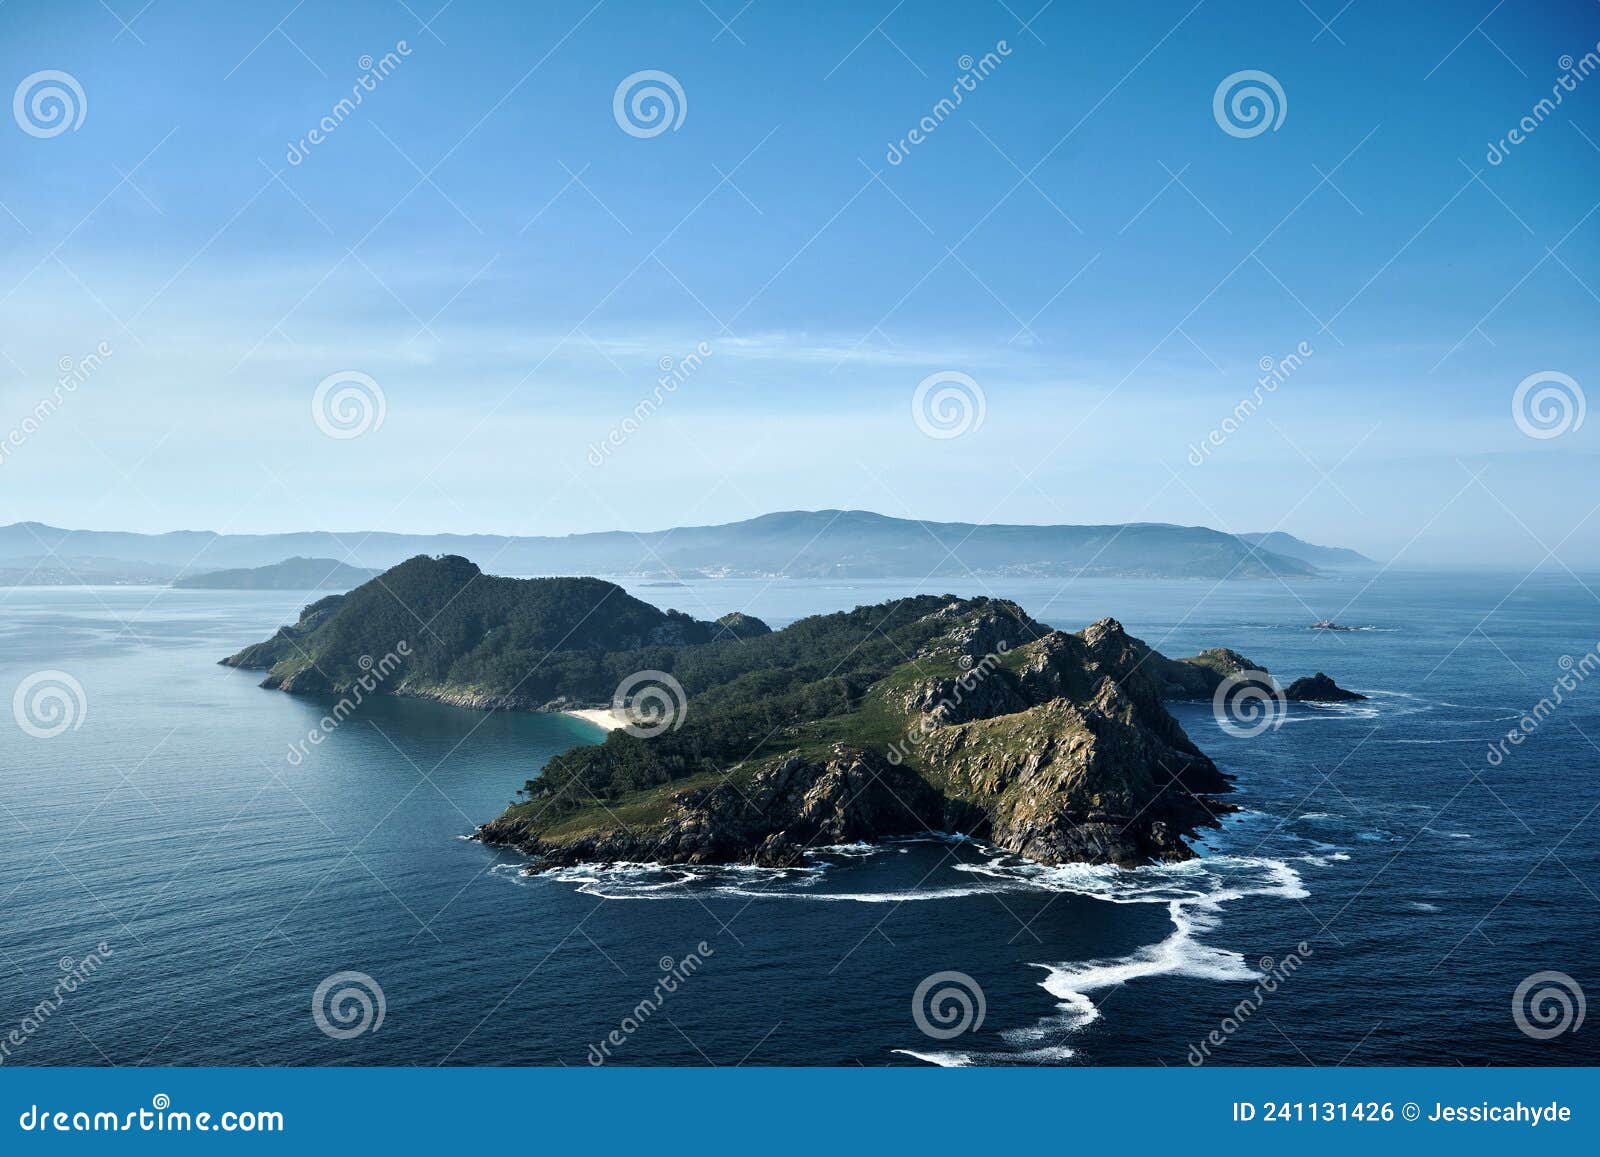 cies islands, atlantic islands of galicia national park